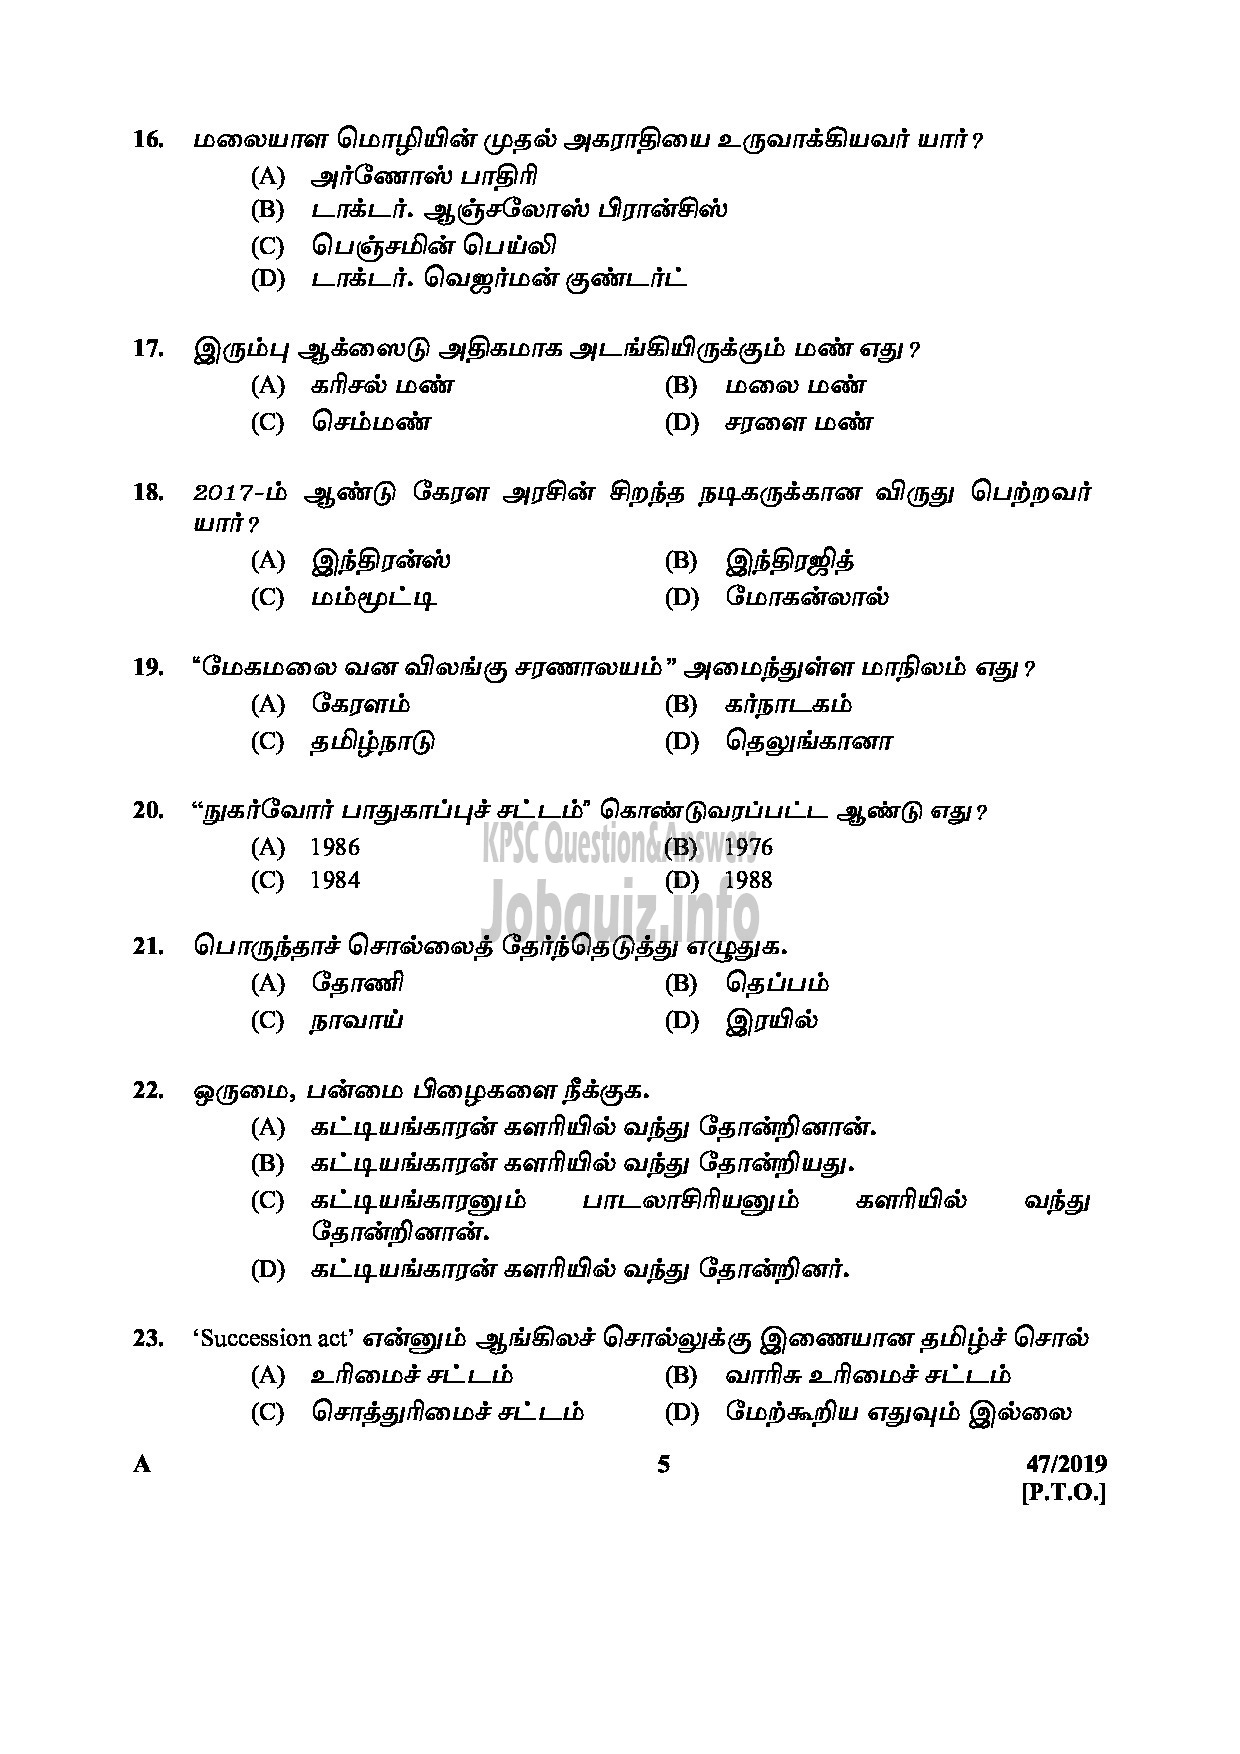 Kerala PSC Question Paper - LDC (TAMIL & MALAYALAM KNOWING) VARIOUS DEPARTMENTS English / Malayalam / Tamil-5